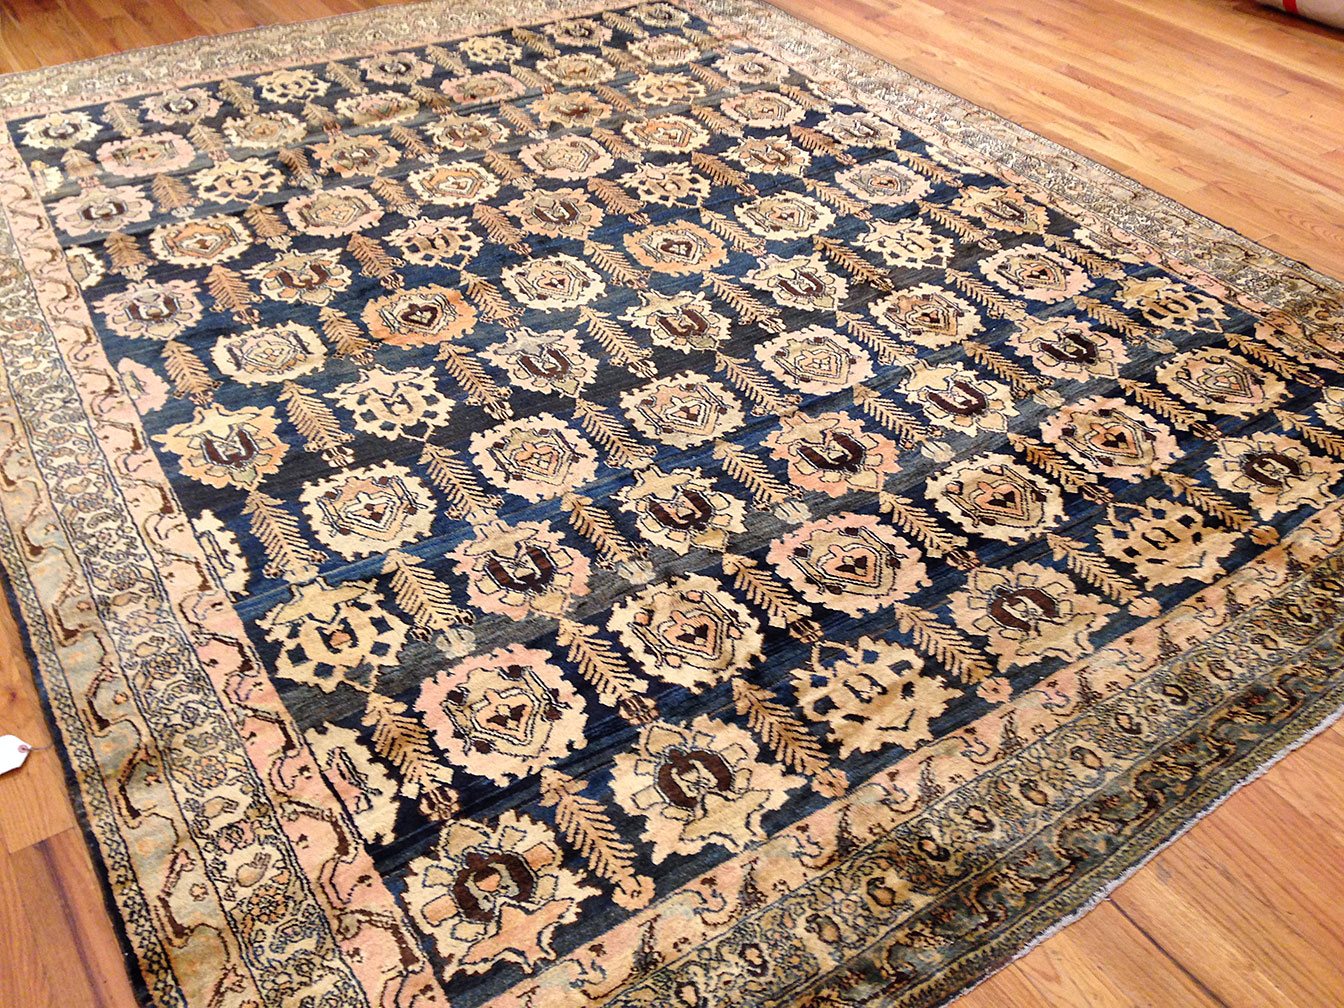 Antique bibi kabad Carpet - # 9685